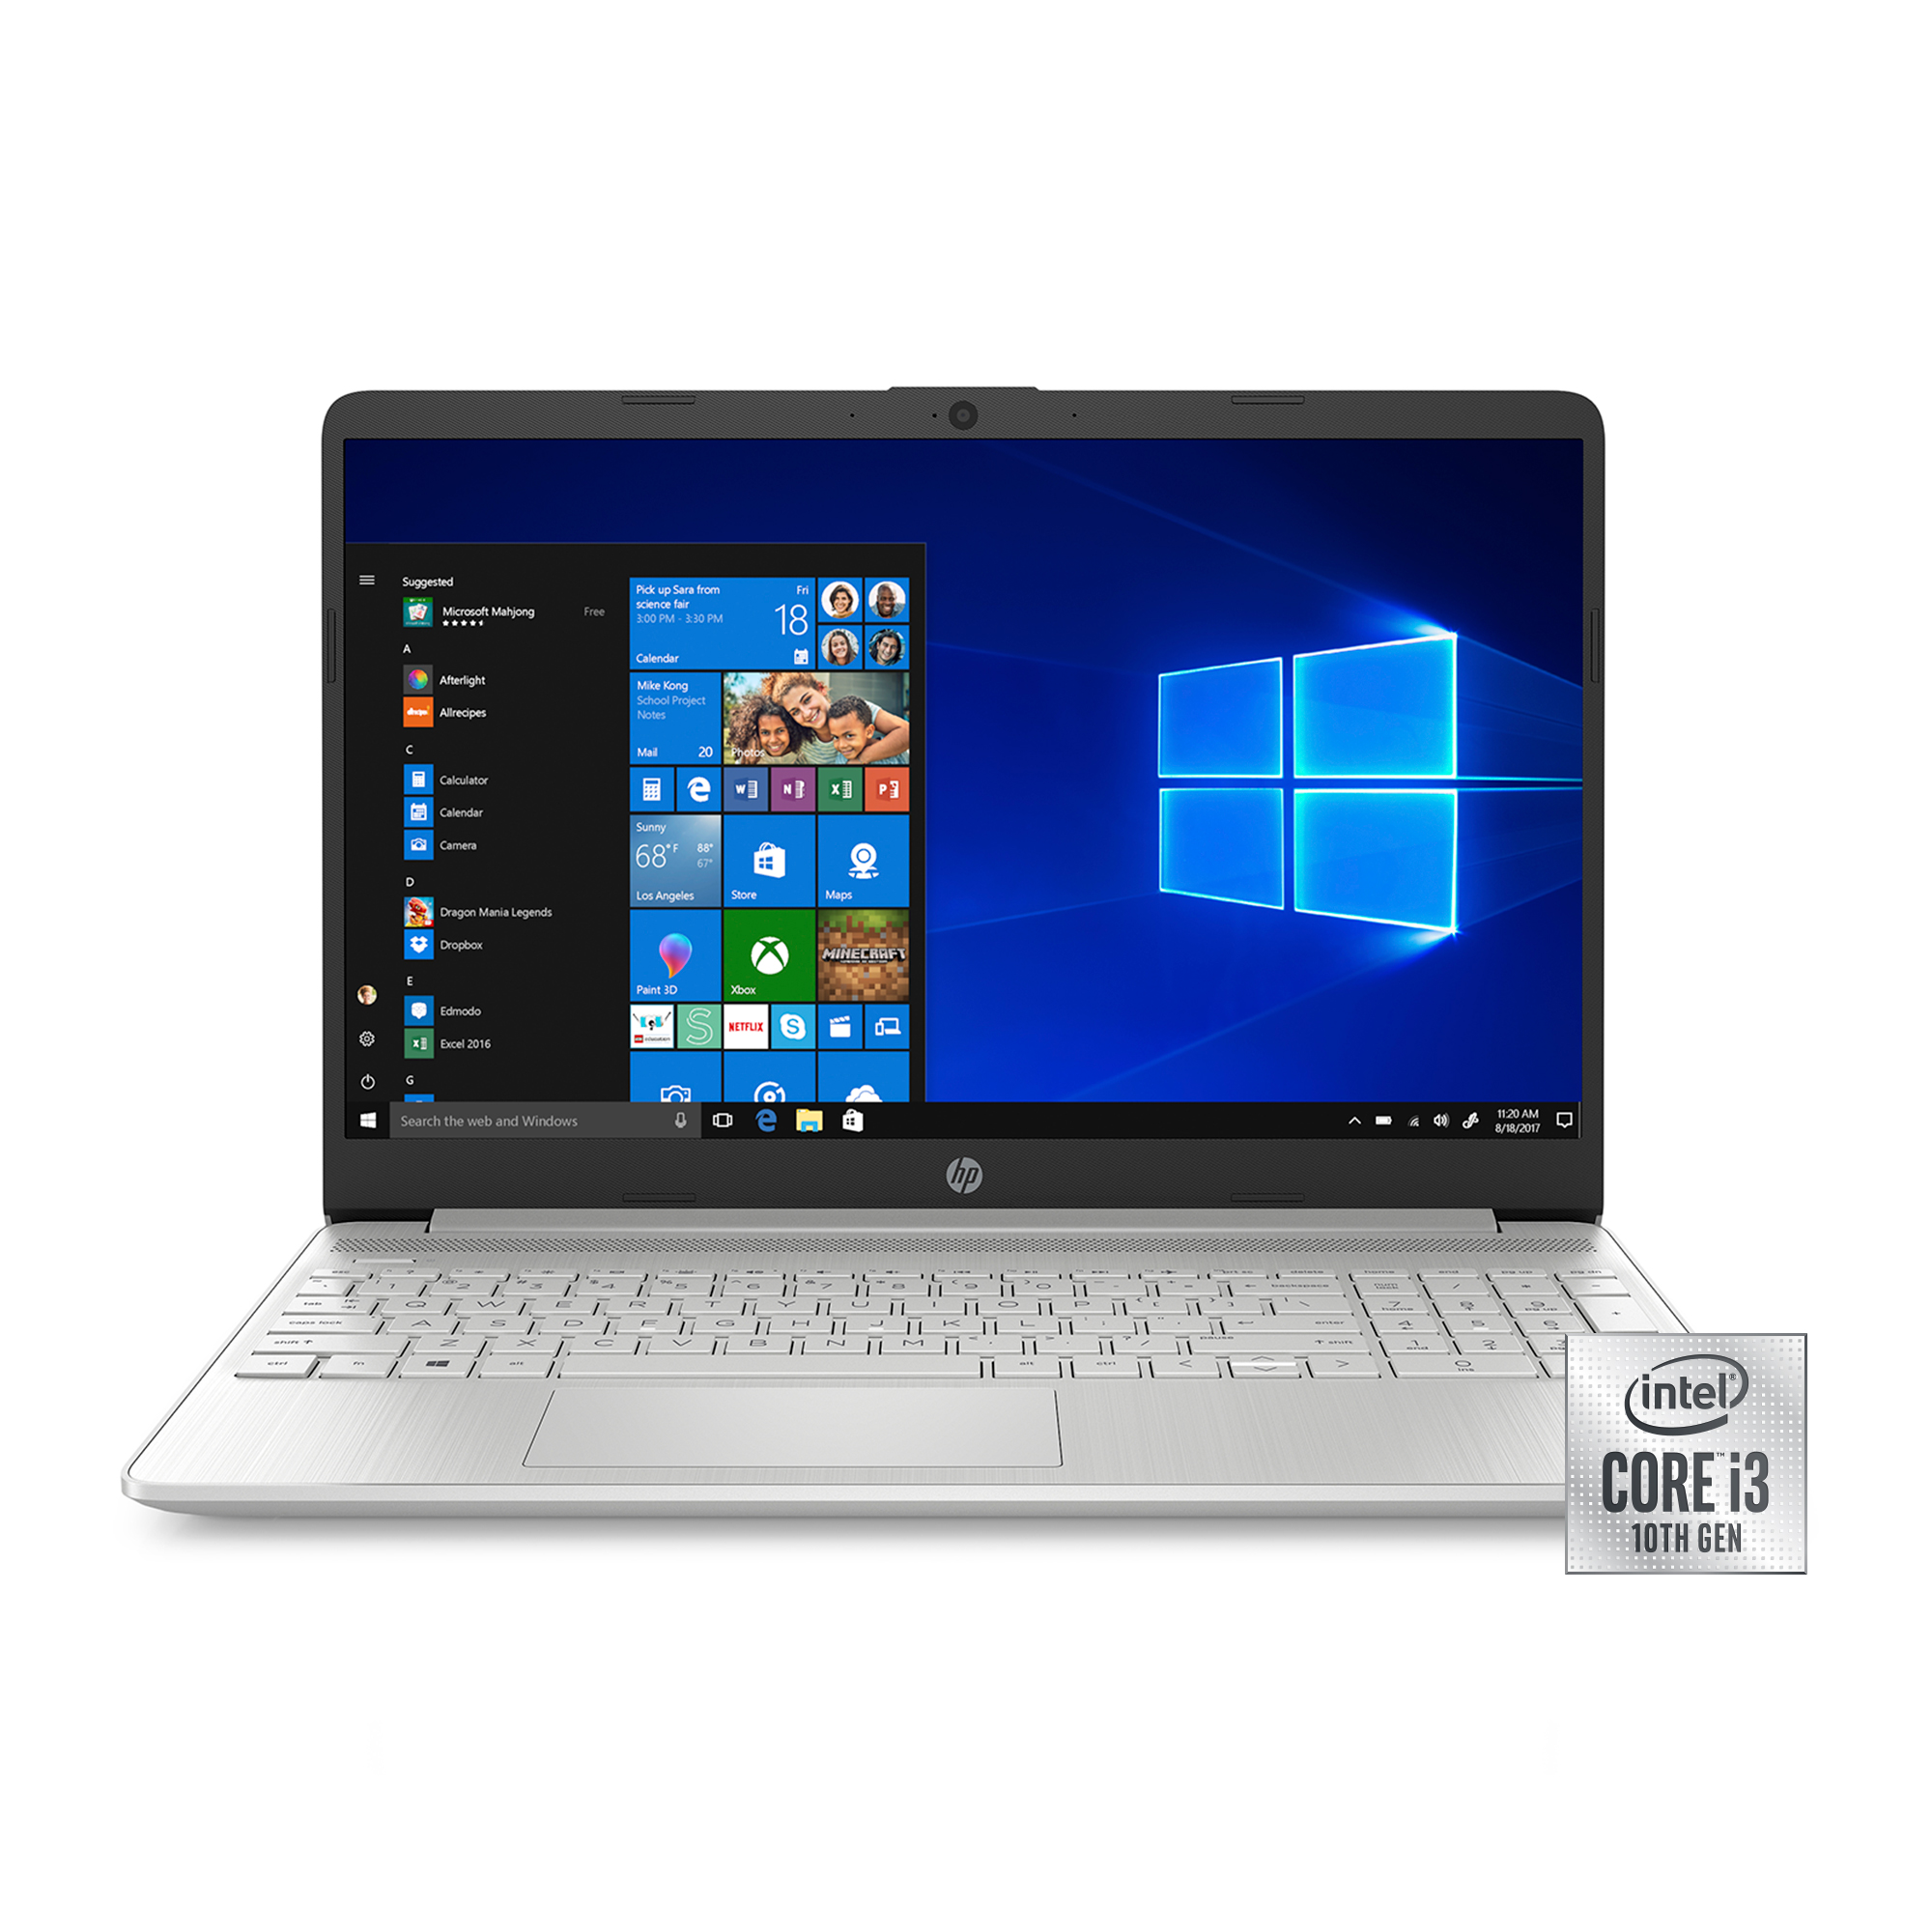 HP 15 Laptop, Intel Core i3-1005G1, 4GB SDRAM, 128GB SSD, Natural Silver, 15-dy1024wm - image 1 of 9